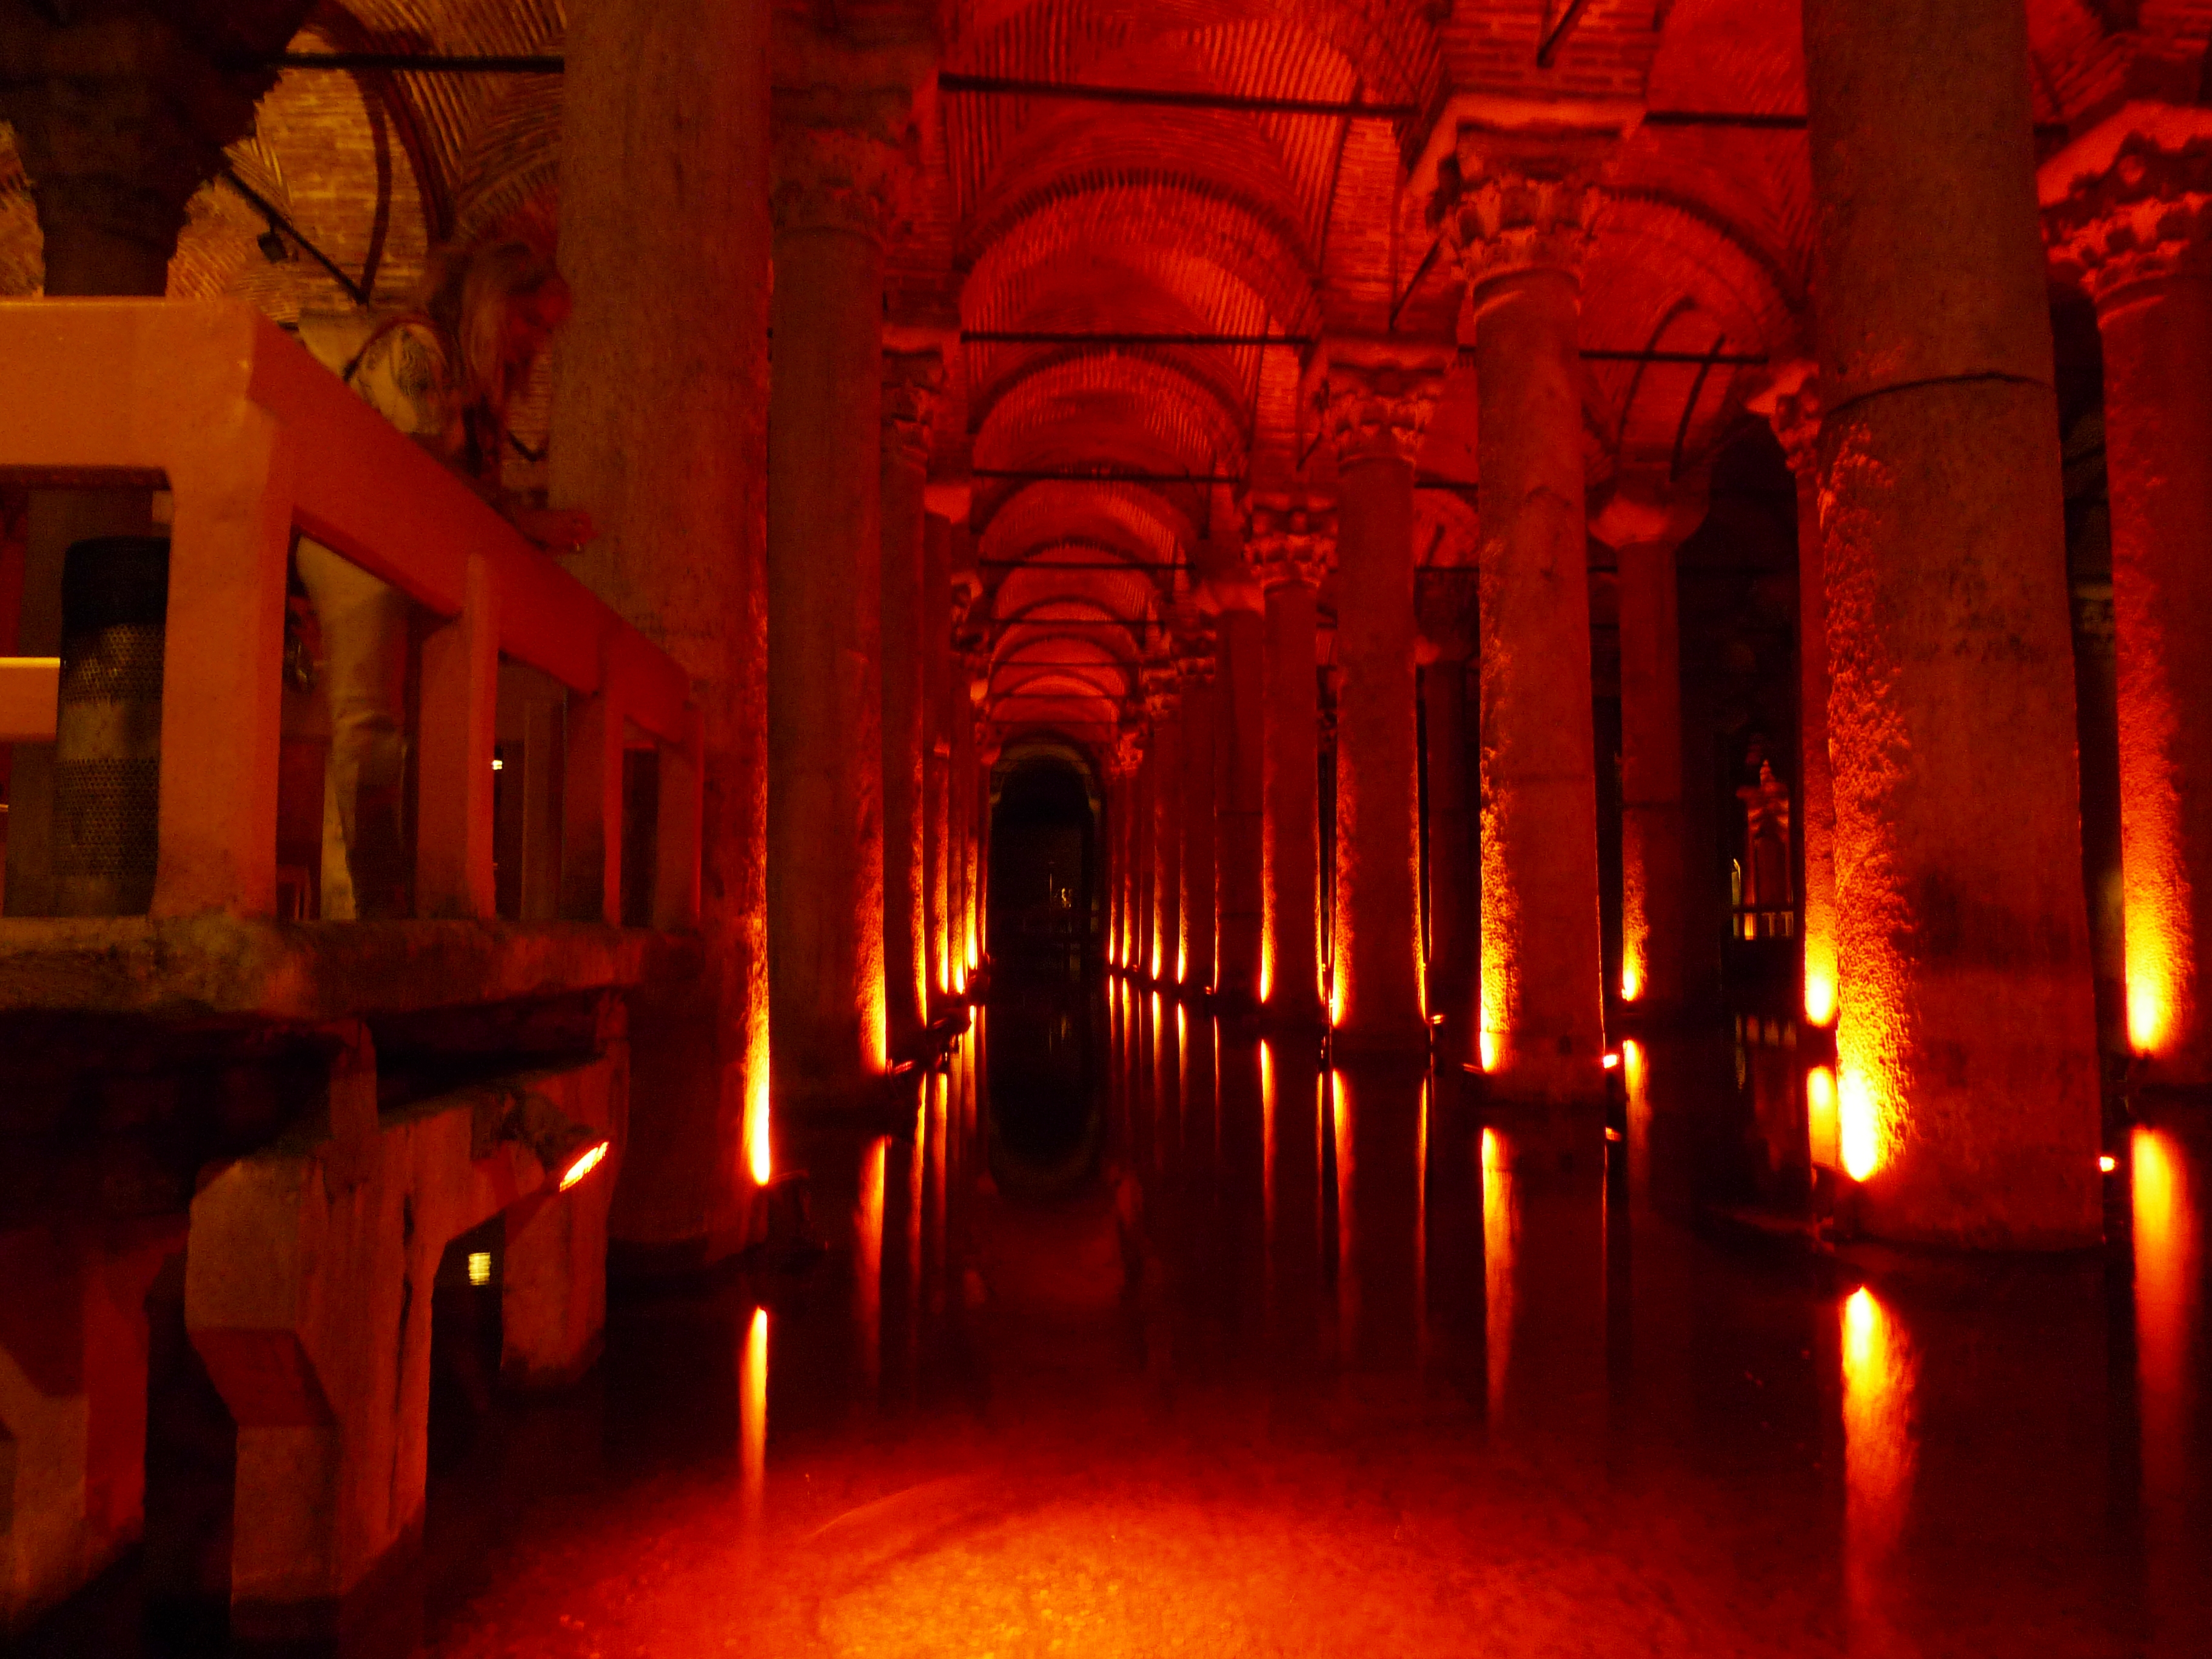 Inside the Basilica Cistern